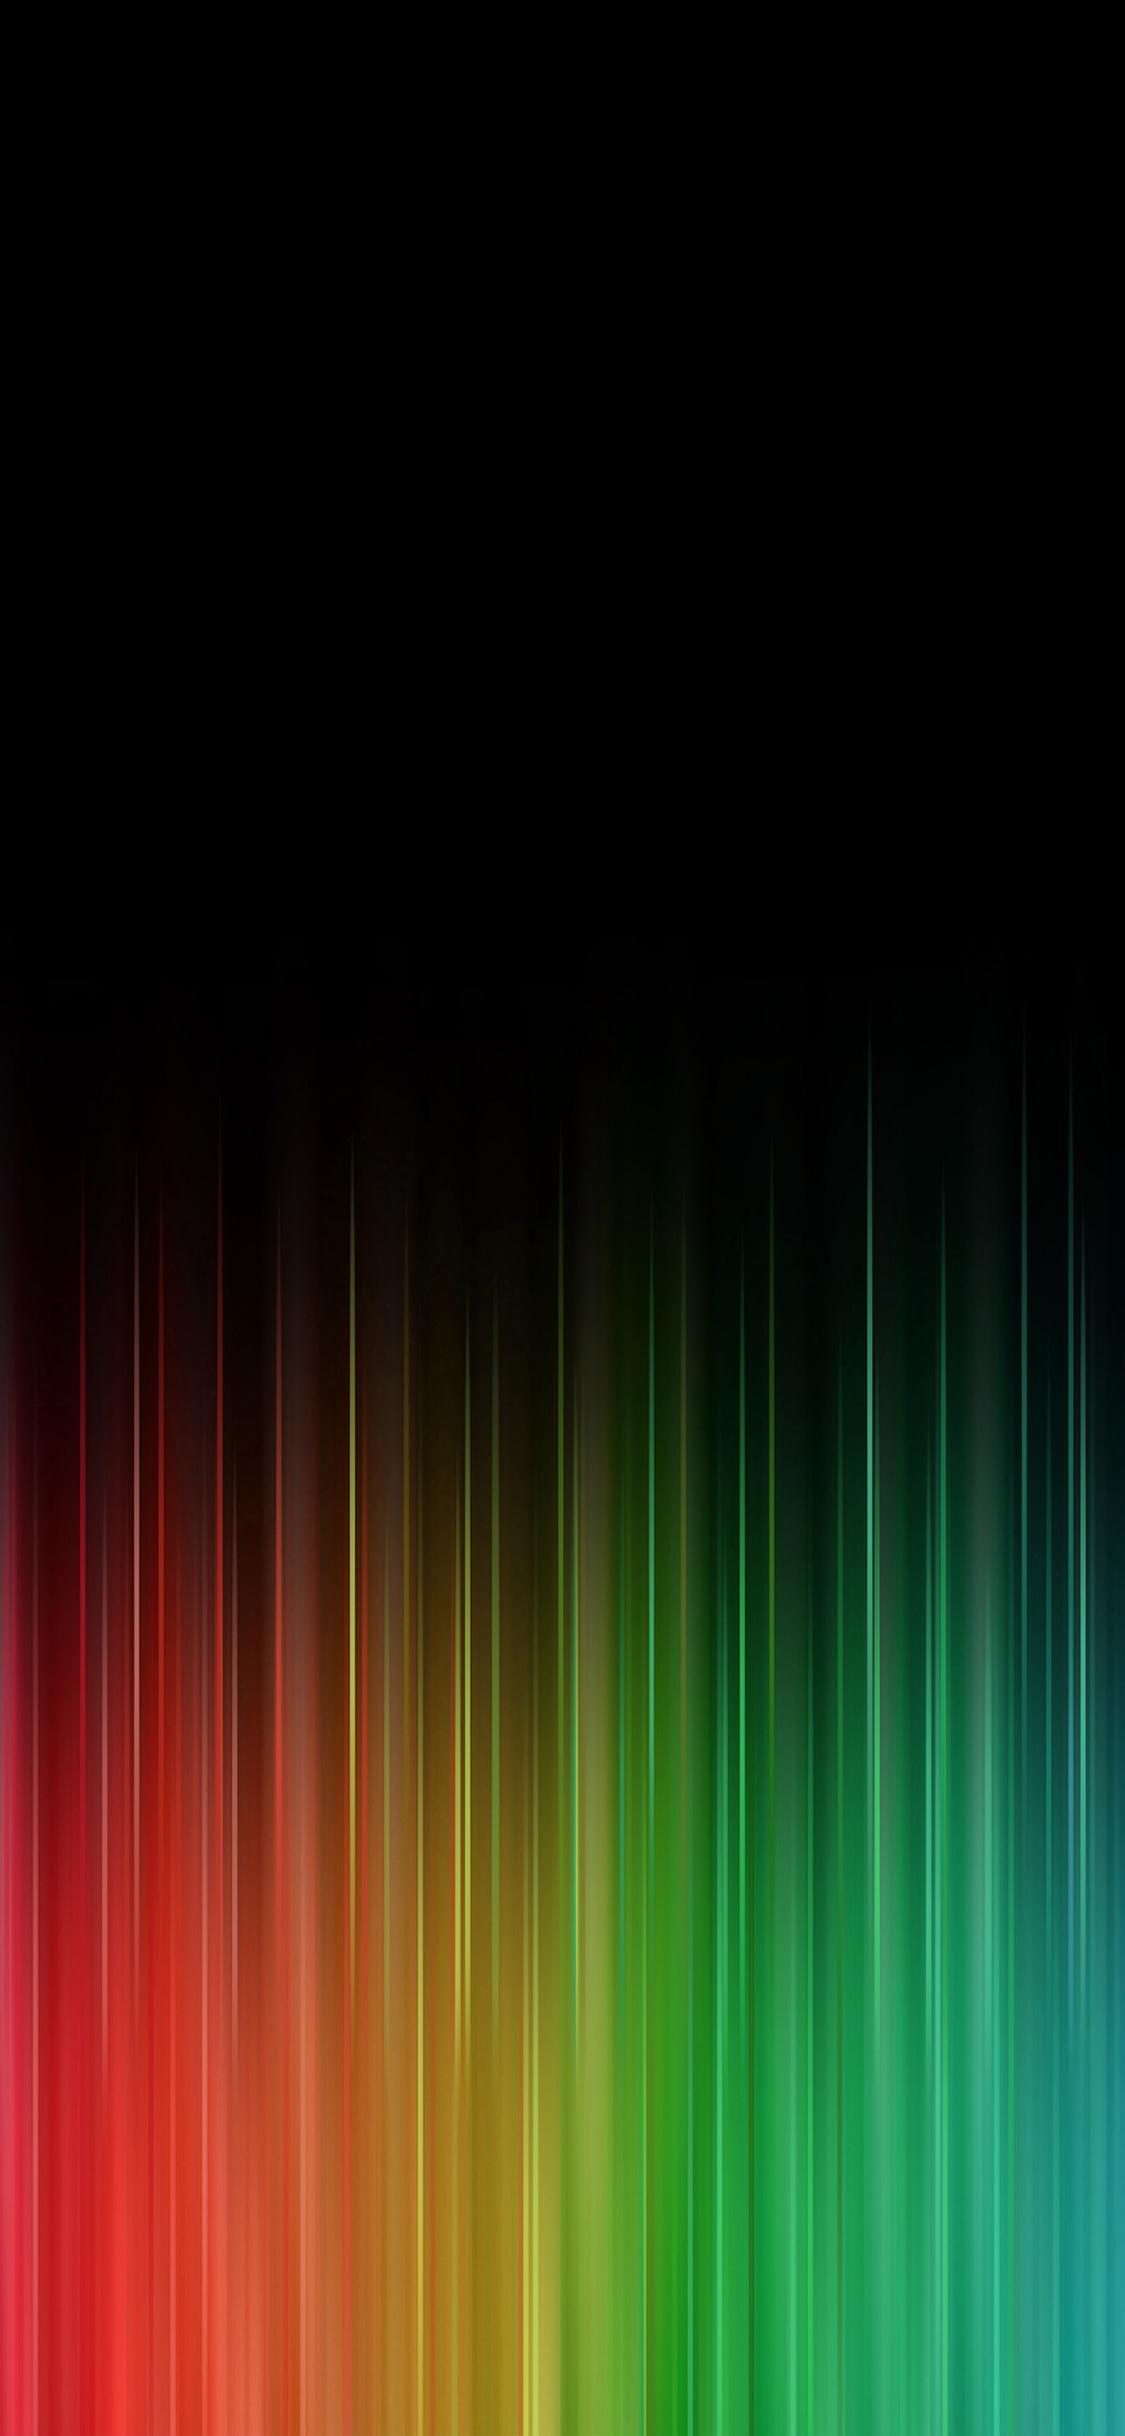 iPhone wallpaper. rainbow line art pattern